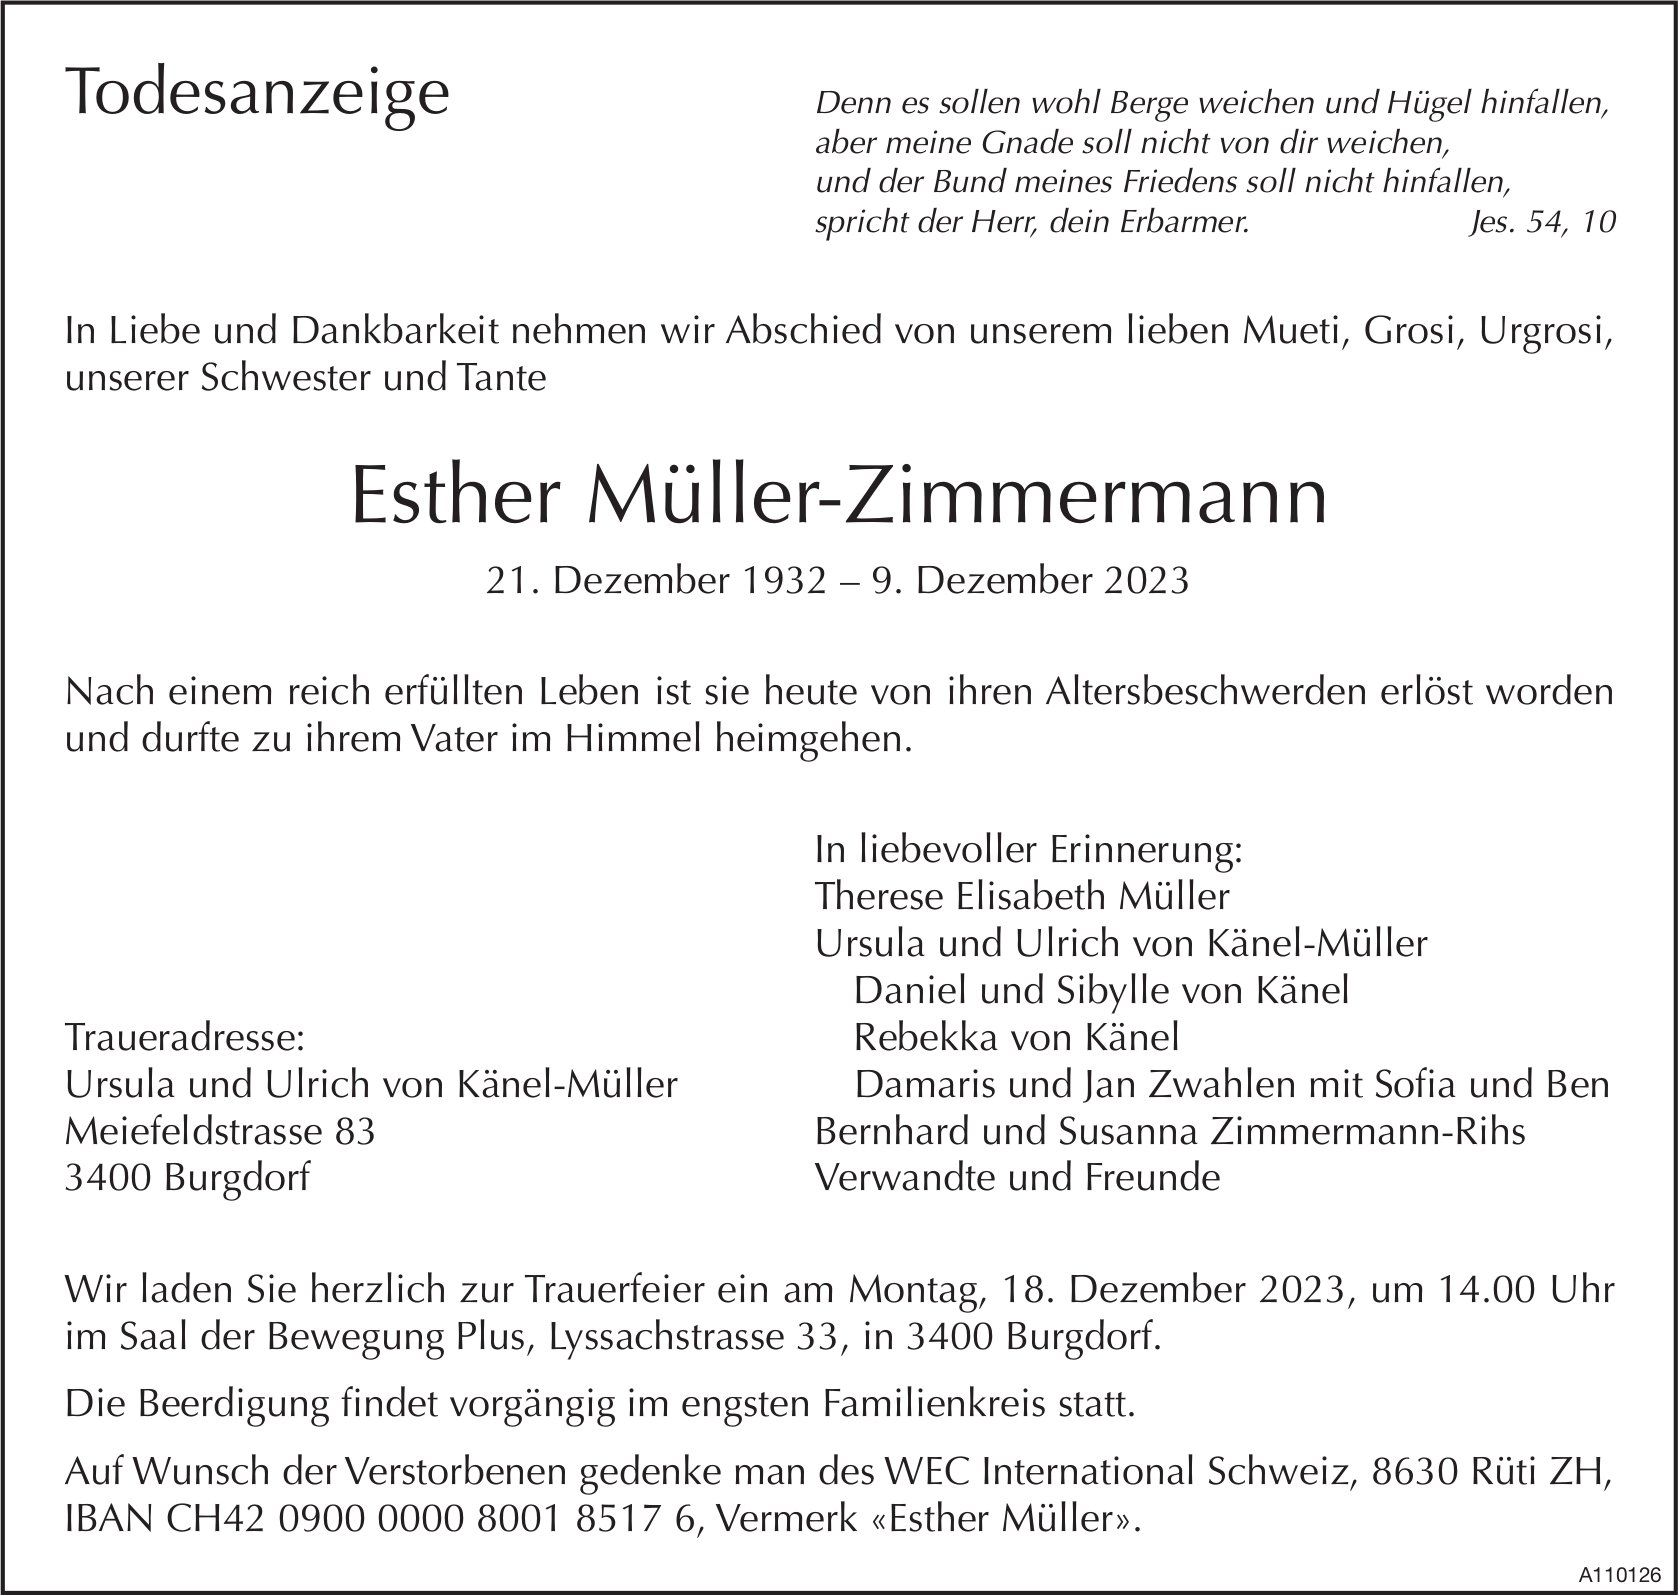 Esther Müller-Zimmermann, Dezember 2023 / TA